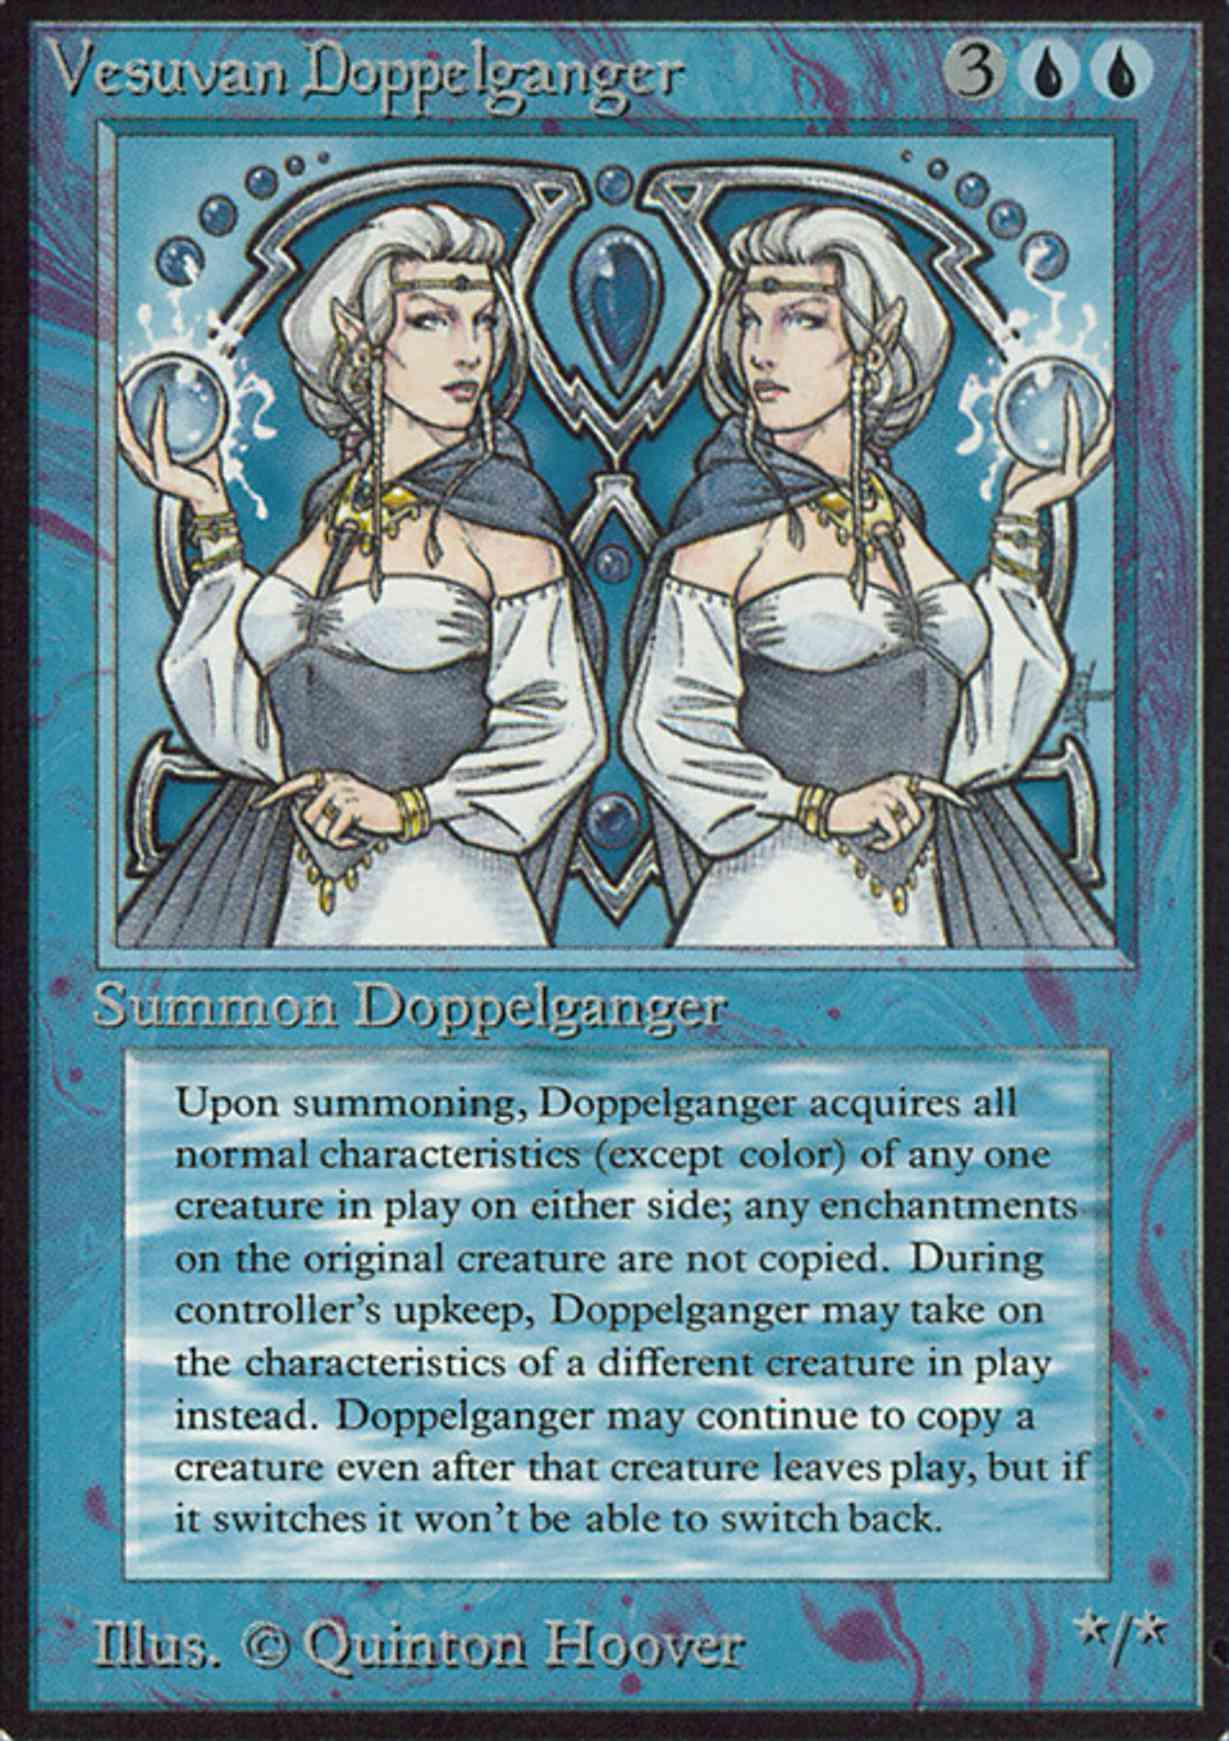 Vesuvan Doppelganger magic card front